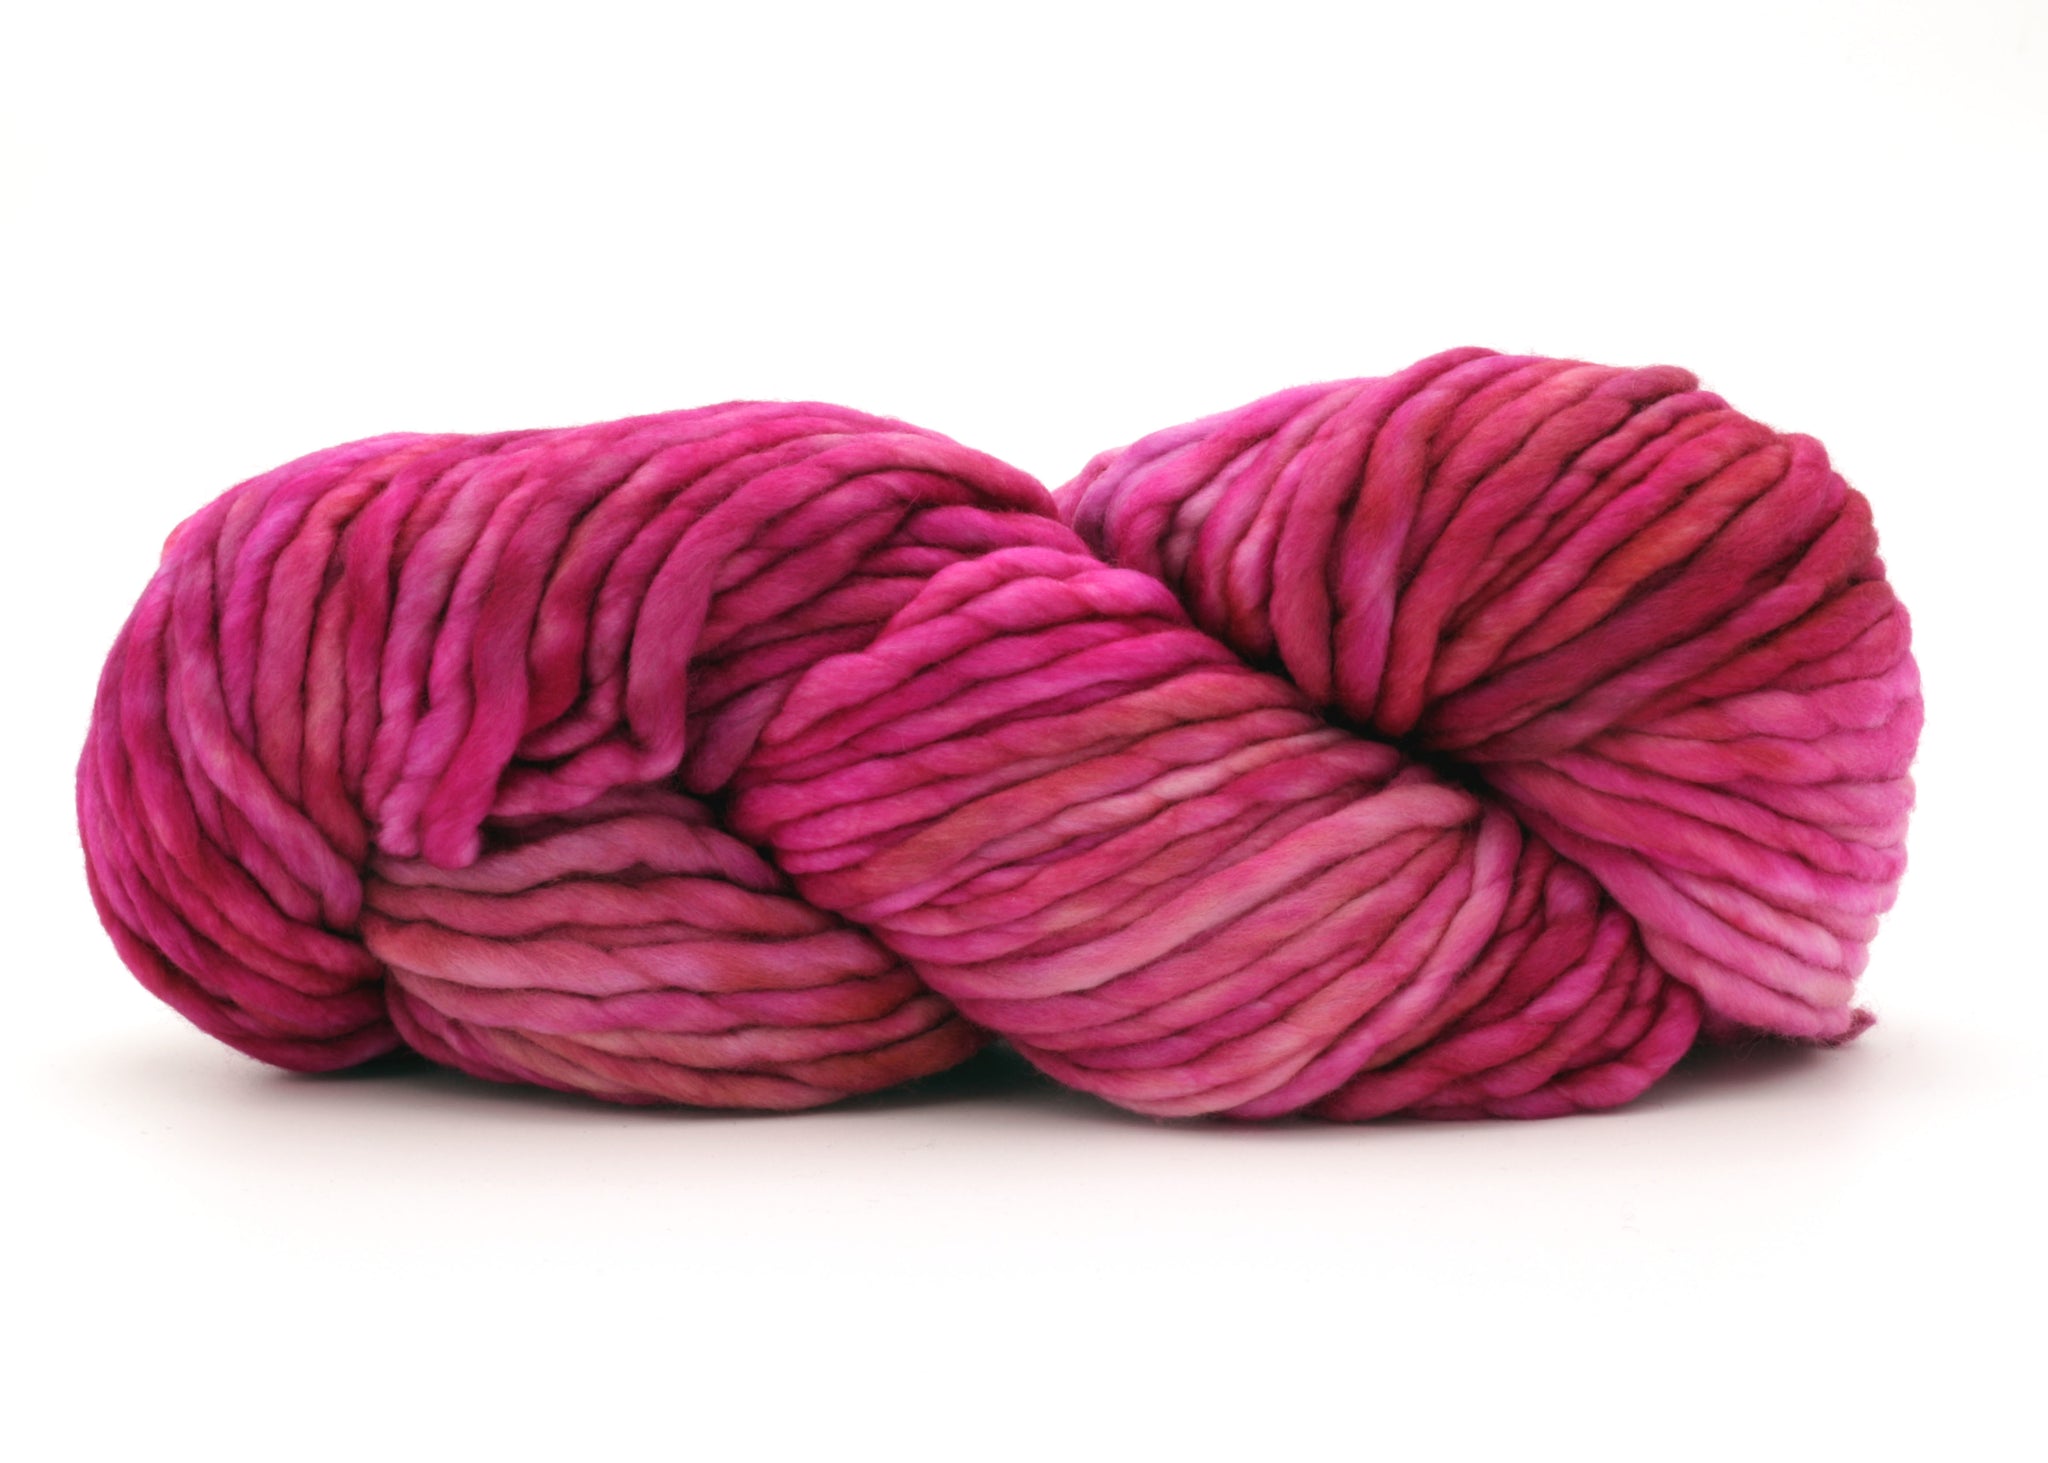 Malabrigo Rasta in color English Rose, Merino Wool Super Bulky